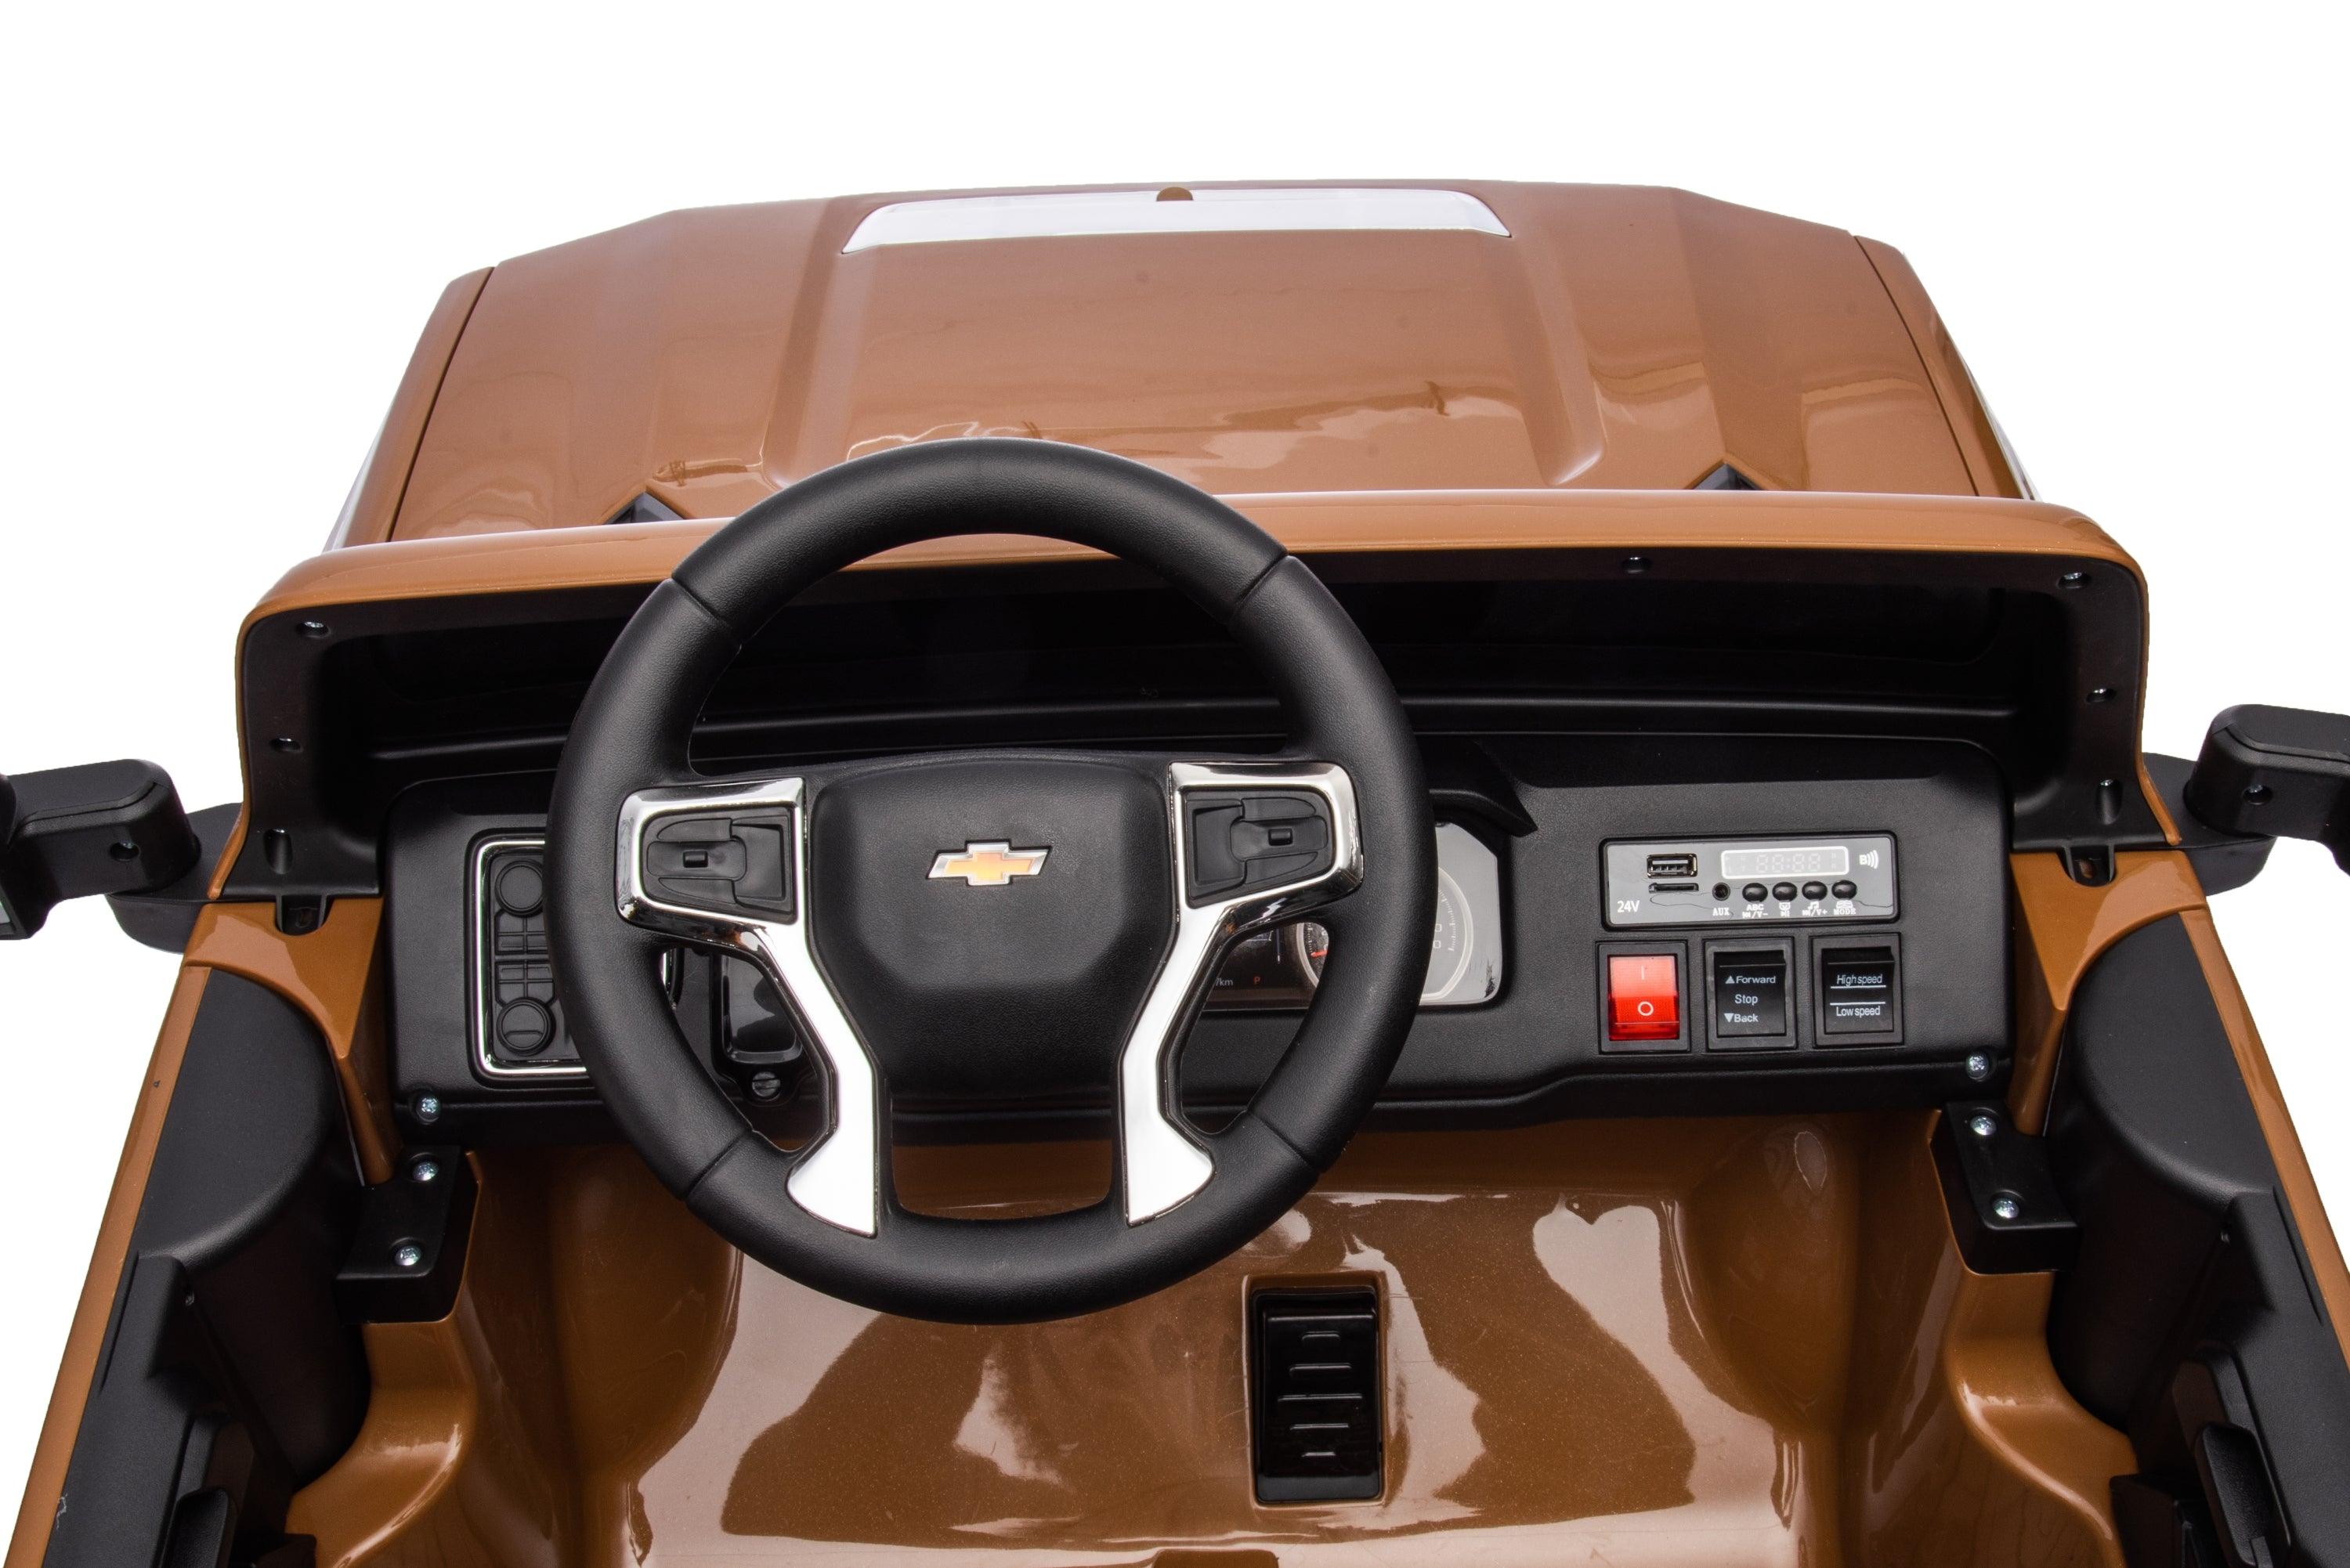 24V 4x4 Chevrolet Silverado 2 Seater Ride on Truck for Kids - DTI Direct Canada